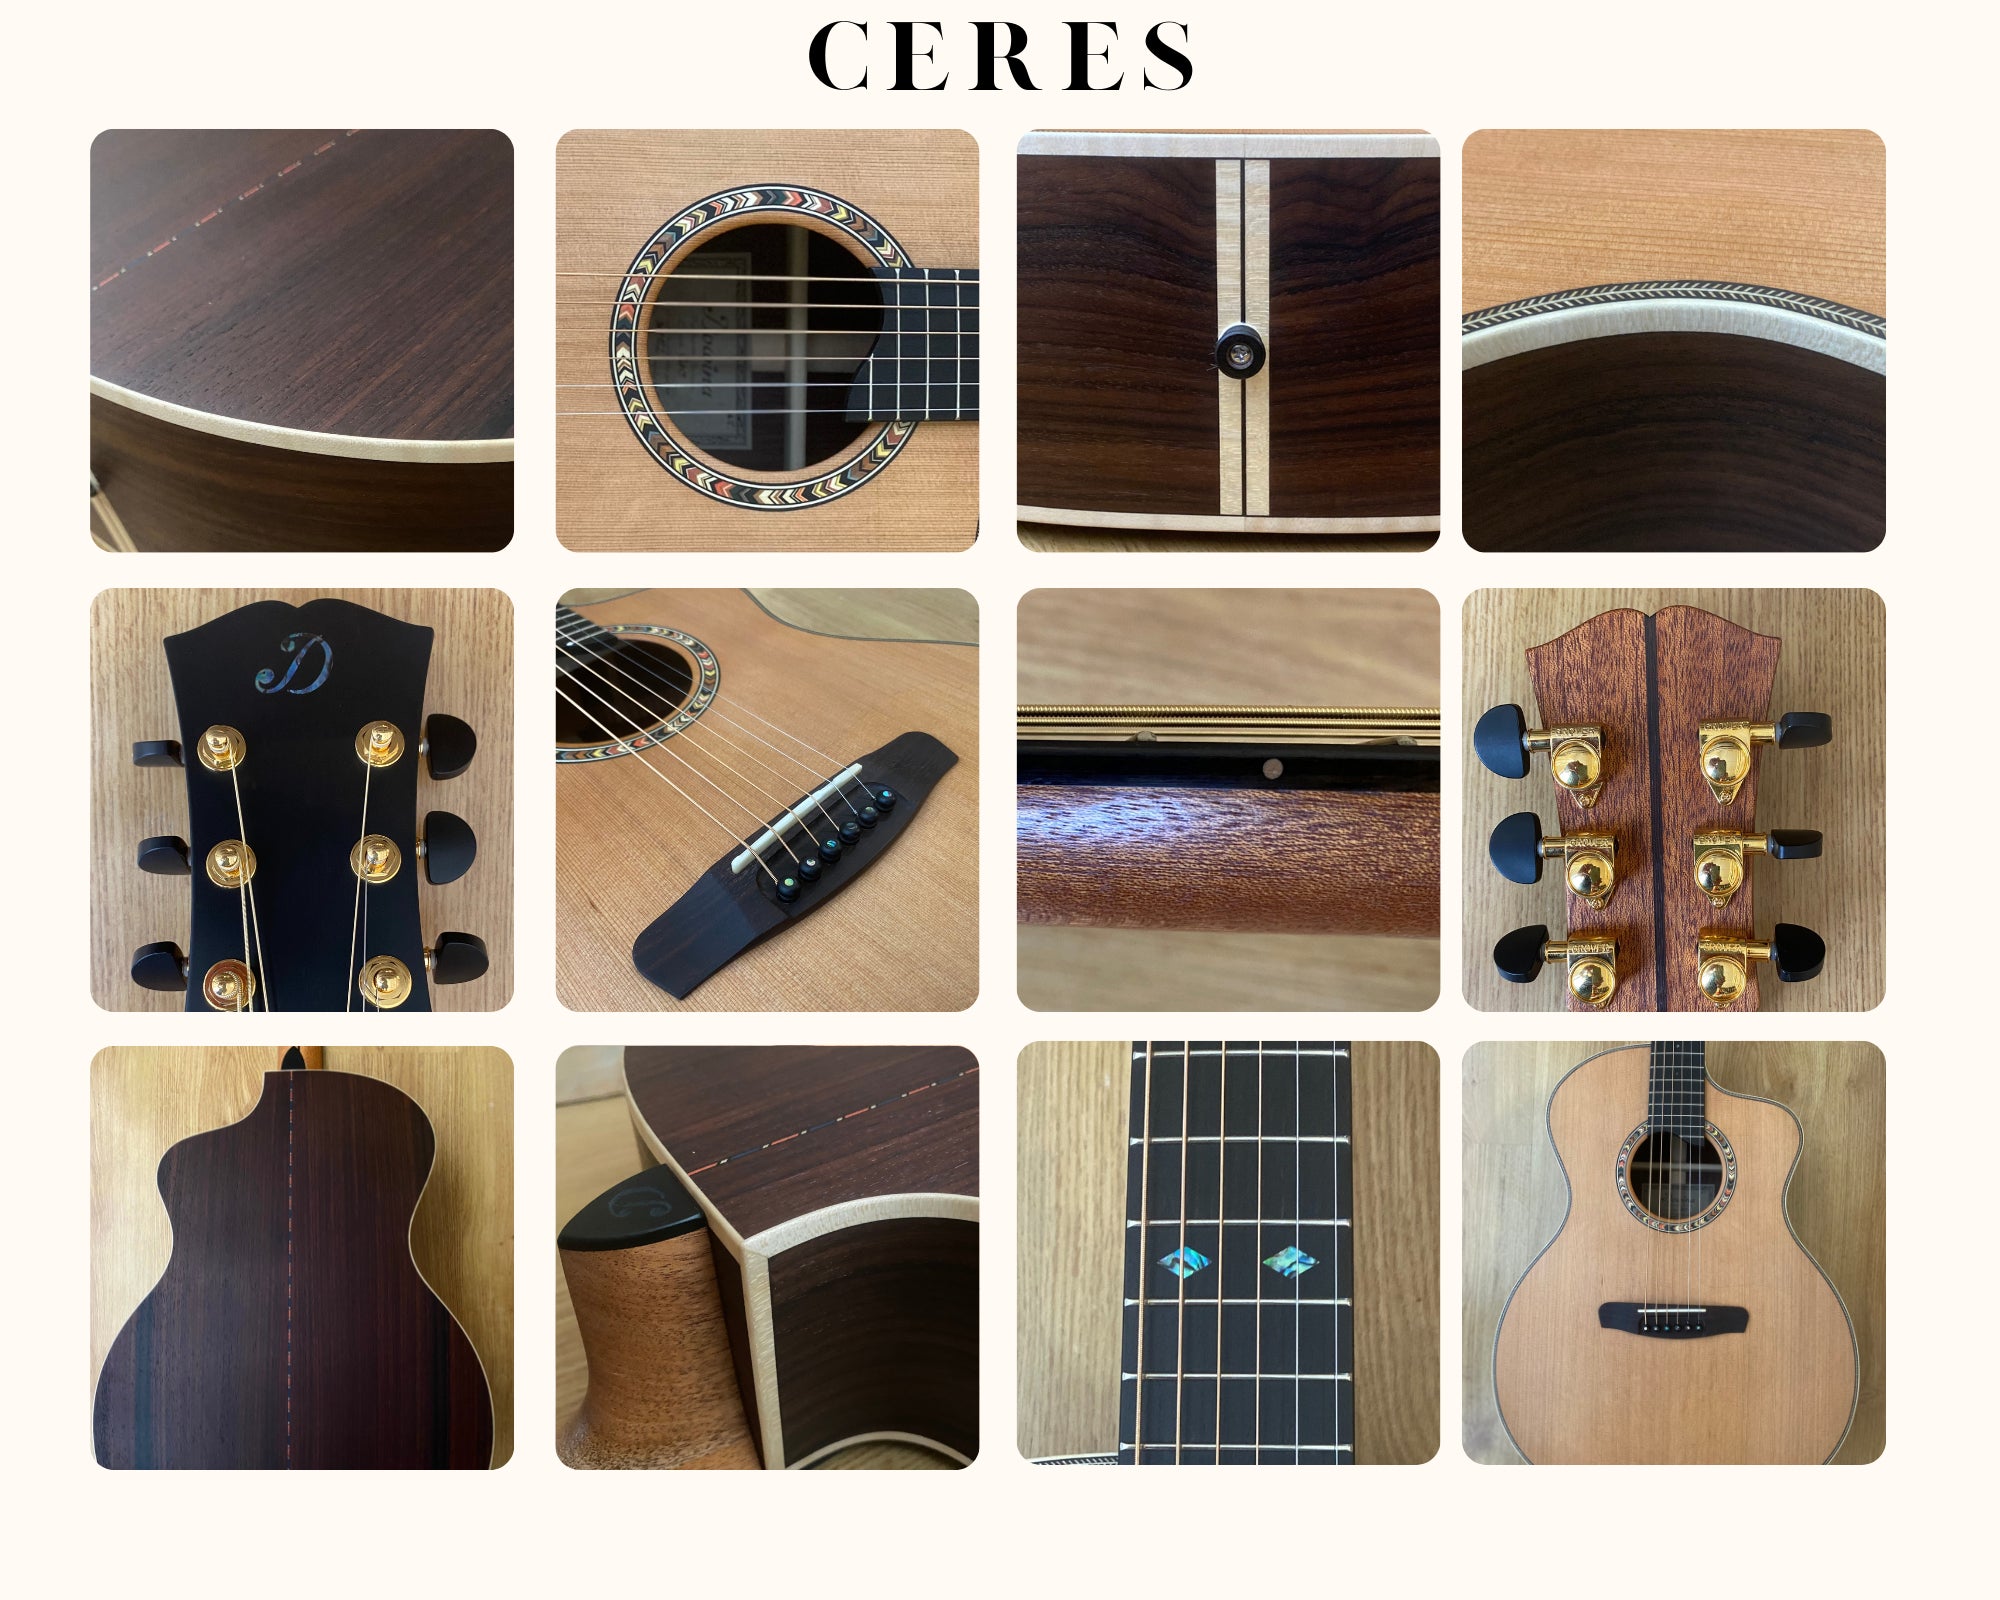 Dowina Rosewood (Ceres) GA, Acoustic Guitar for sale at Richards Guitars.